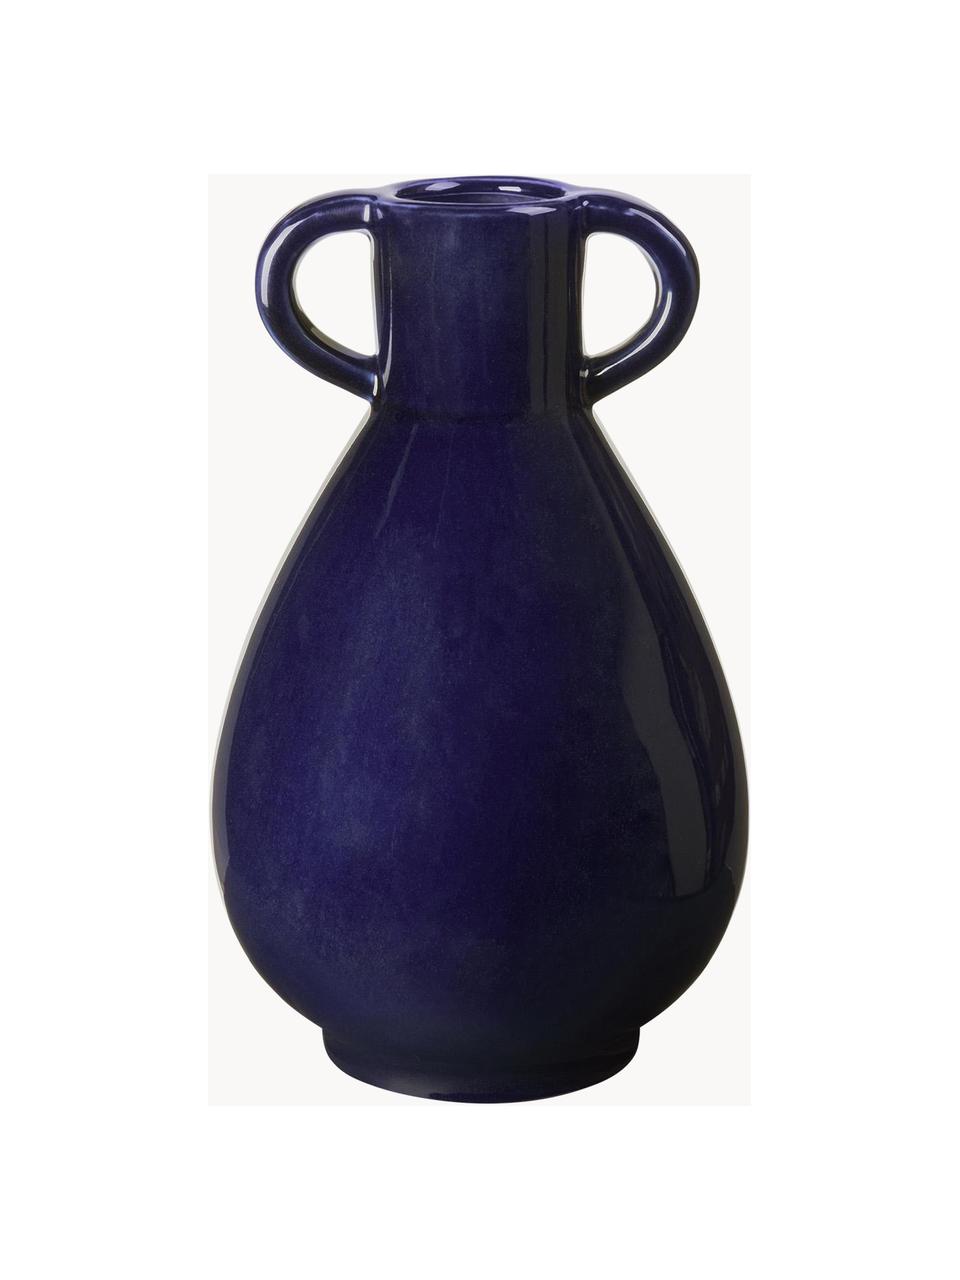 Handgefertigte Vase Simi aus Keramik, H 30 cm, Keramik, glasiert, Dunkelblau, B 18 x H 30 cm